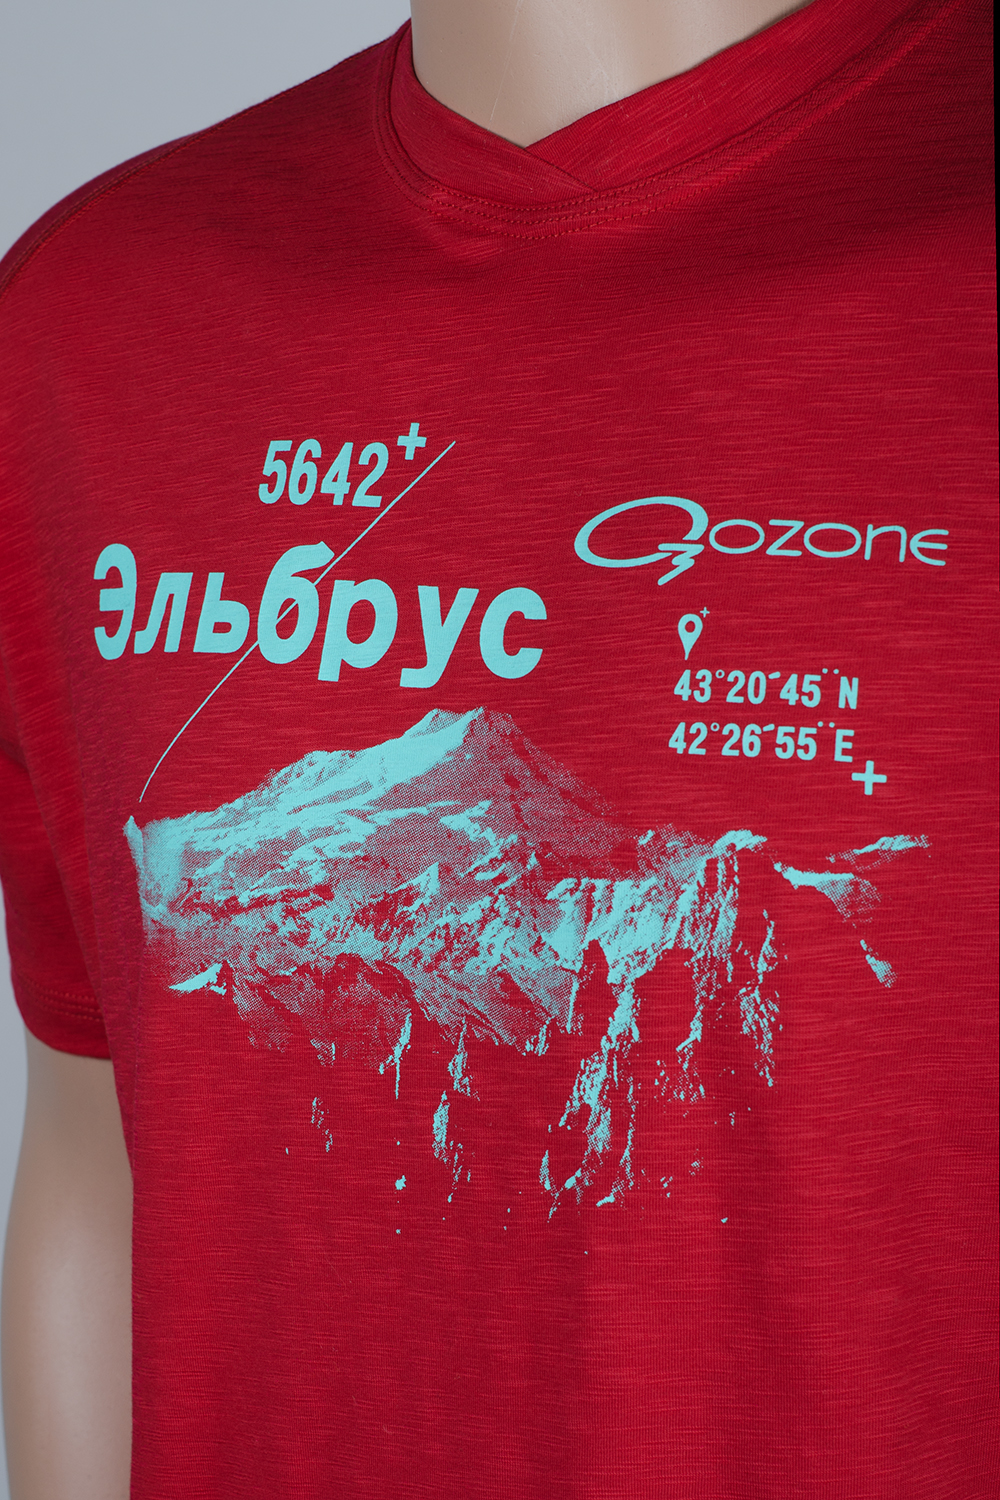 Футболка Эльбрус. All Level футболки. Озон футболка открытое плечо. Футболки на Озон для мужчин.